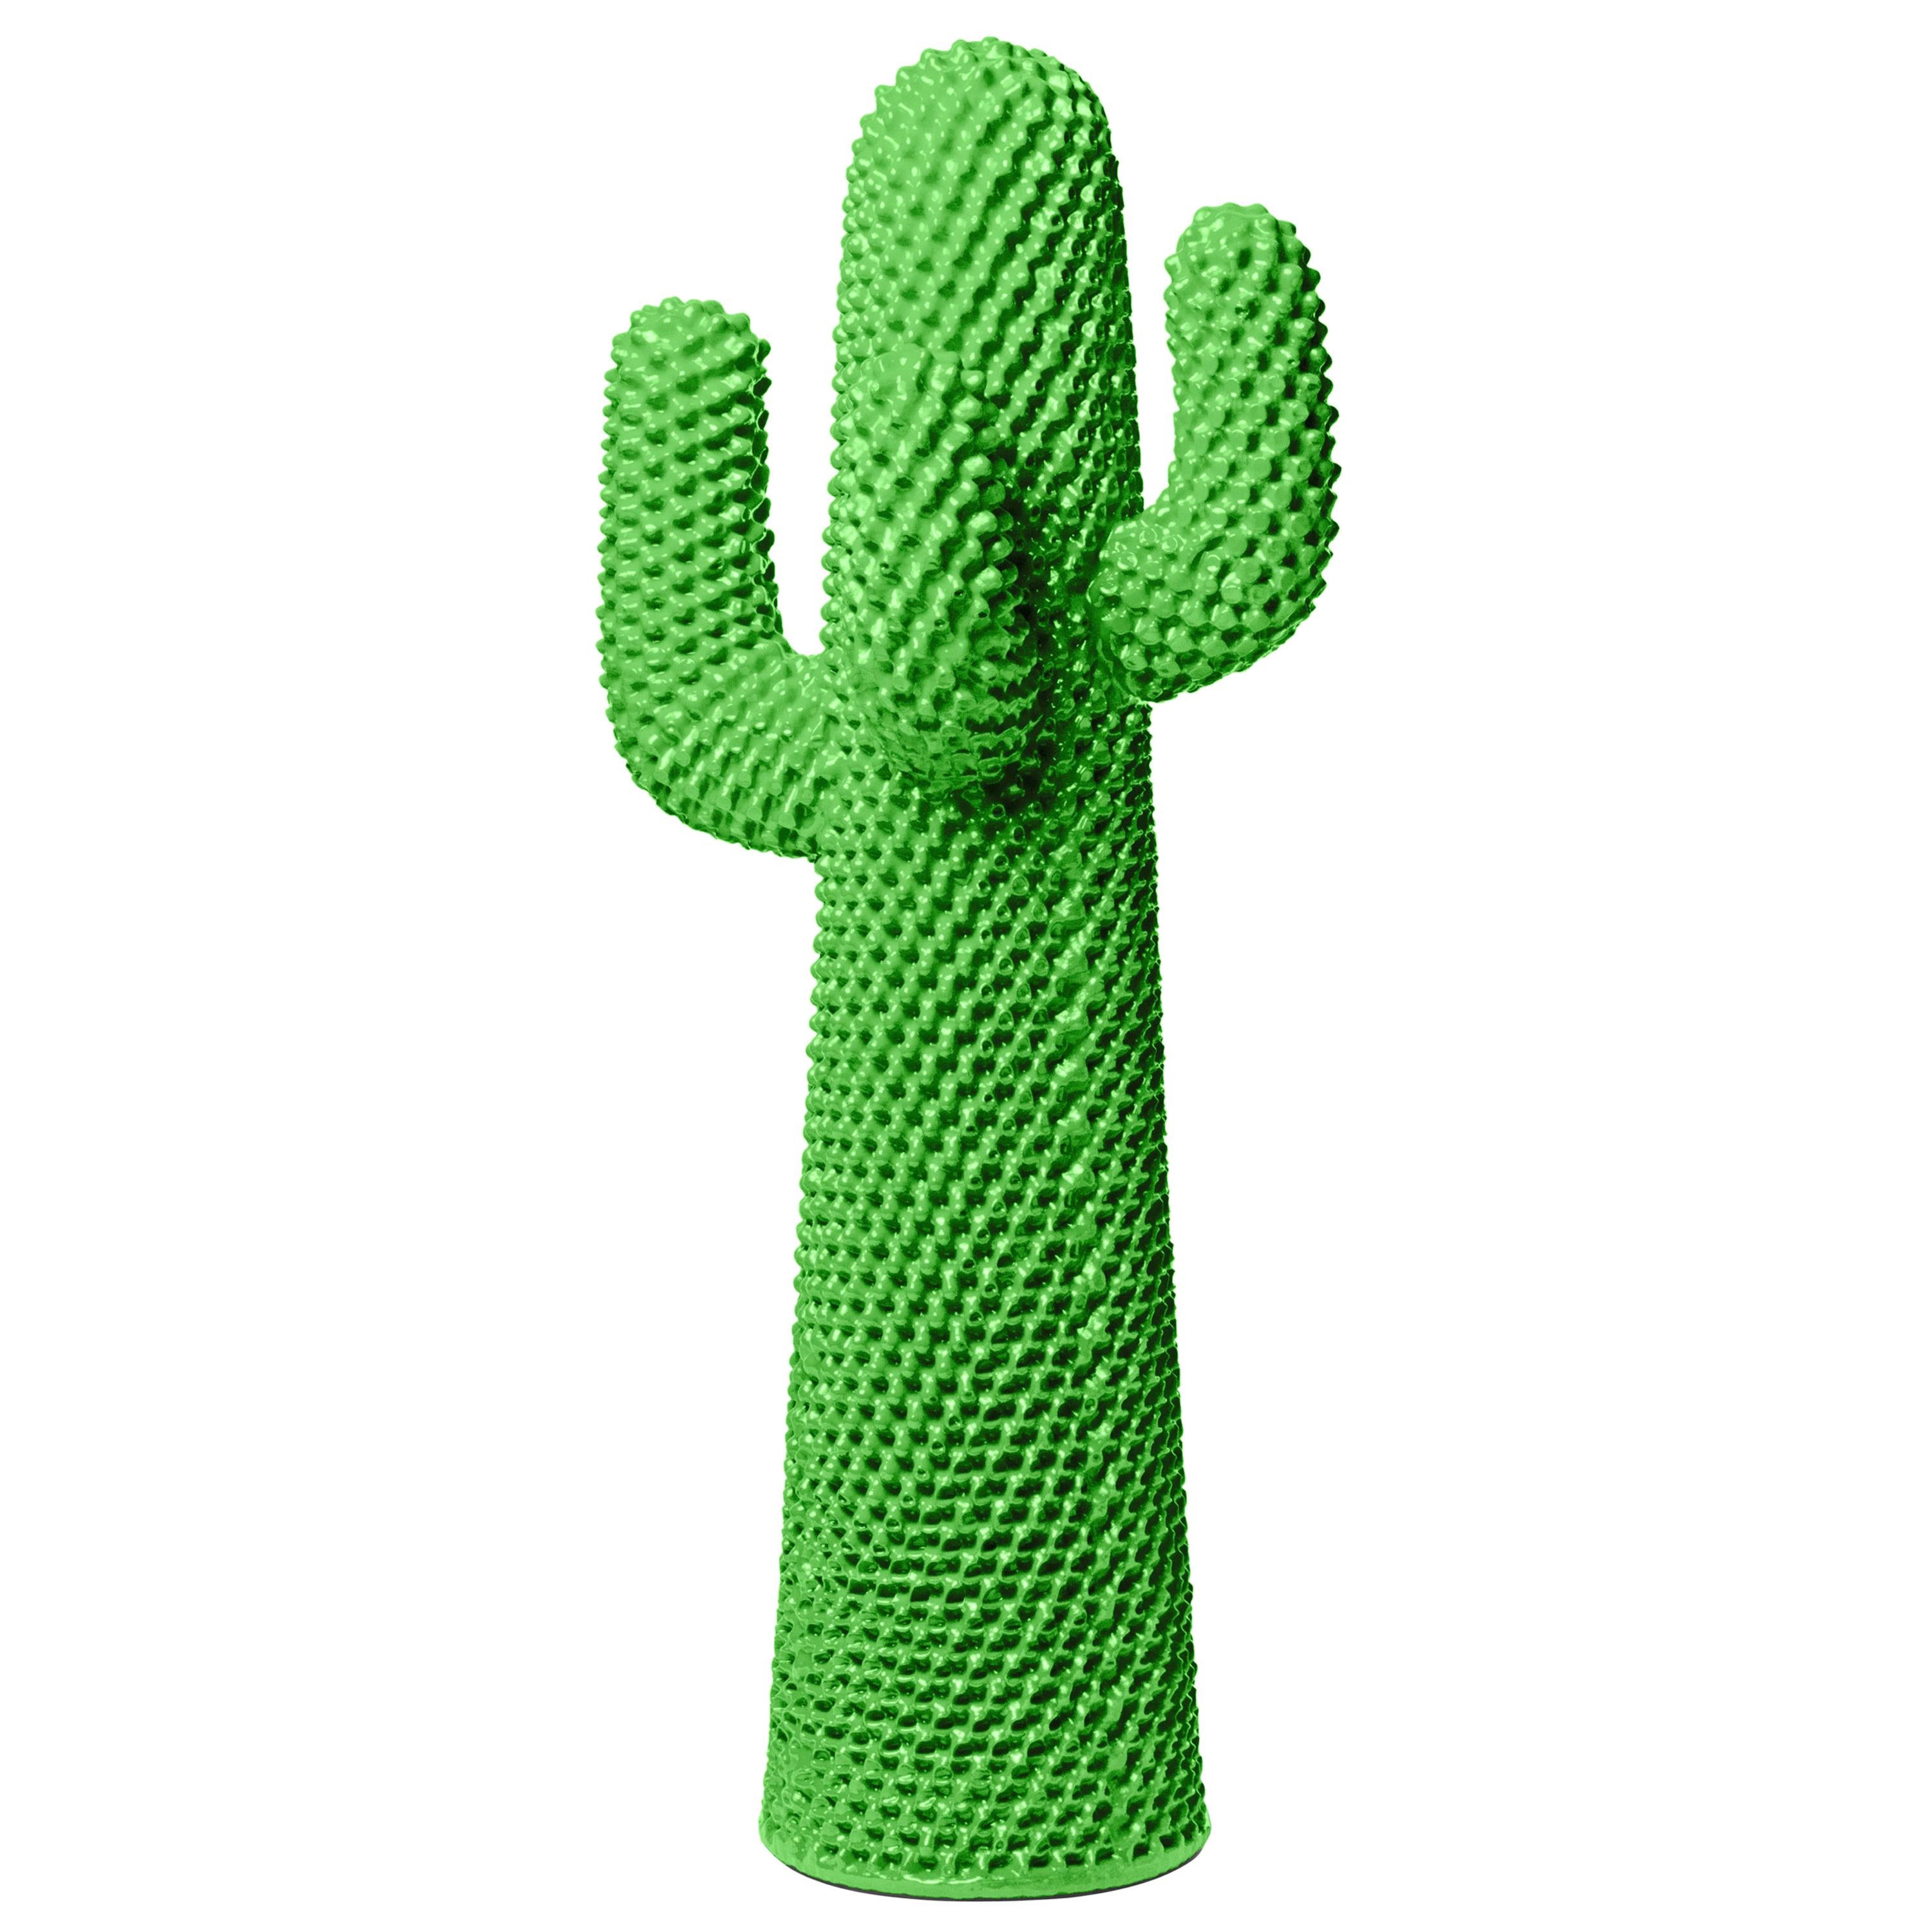 GUFRAM Another Green Cactus Sculptural Coatrack by Drocco & Mello